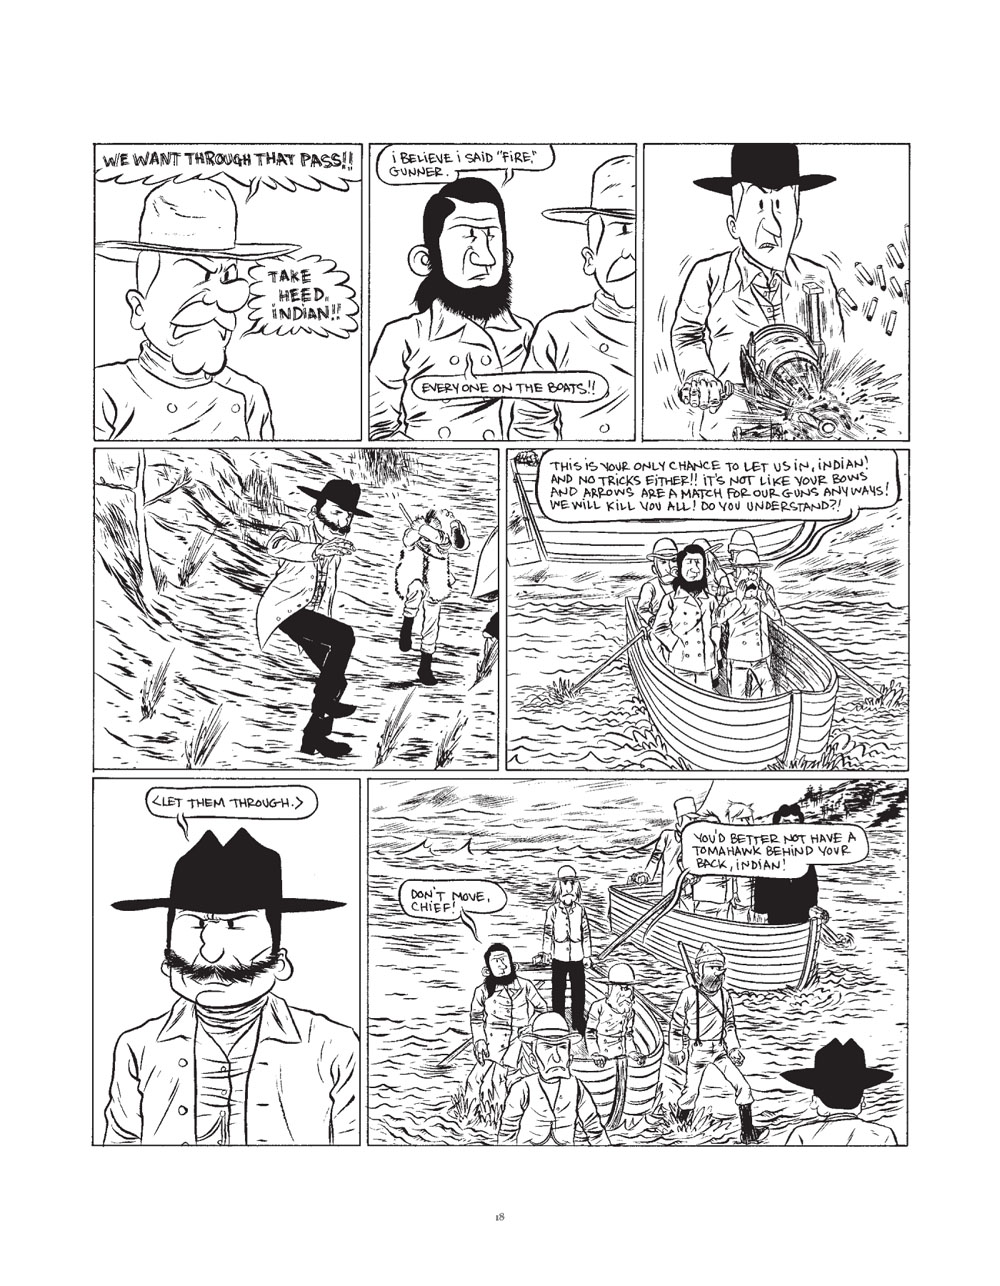 The Klondike Page 018